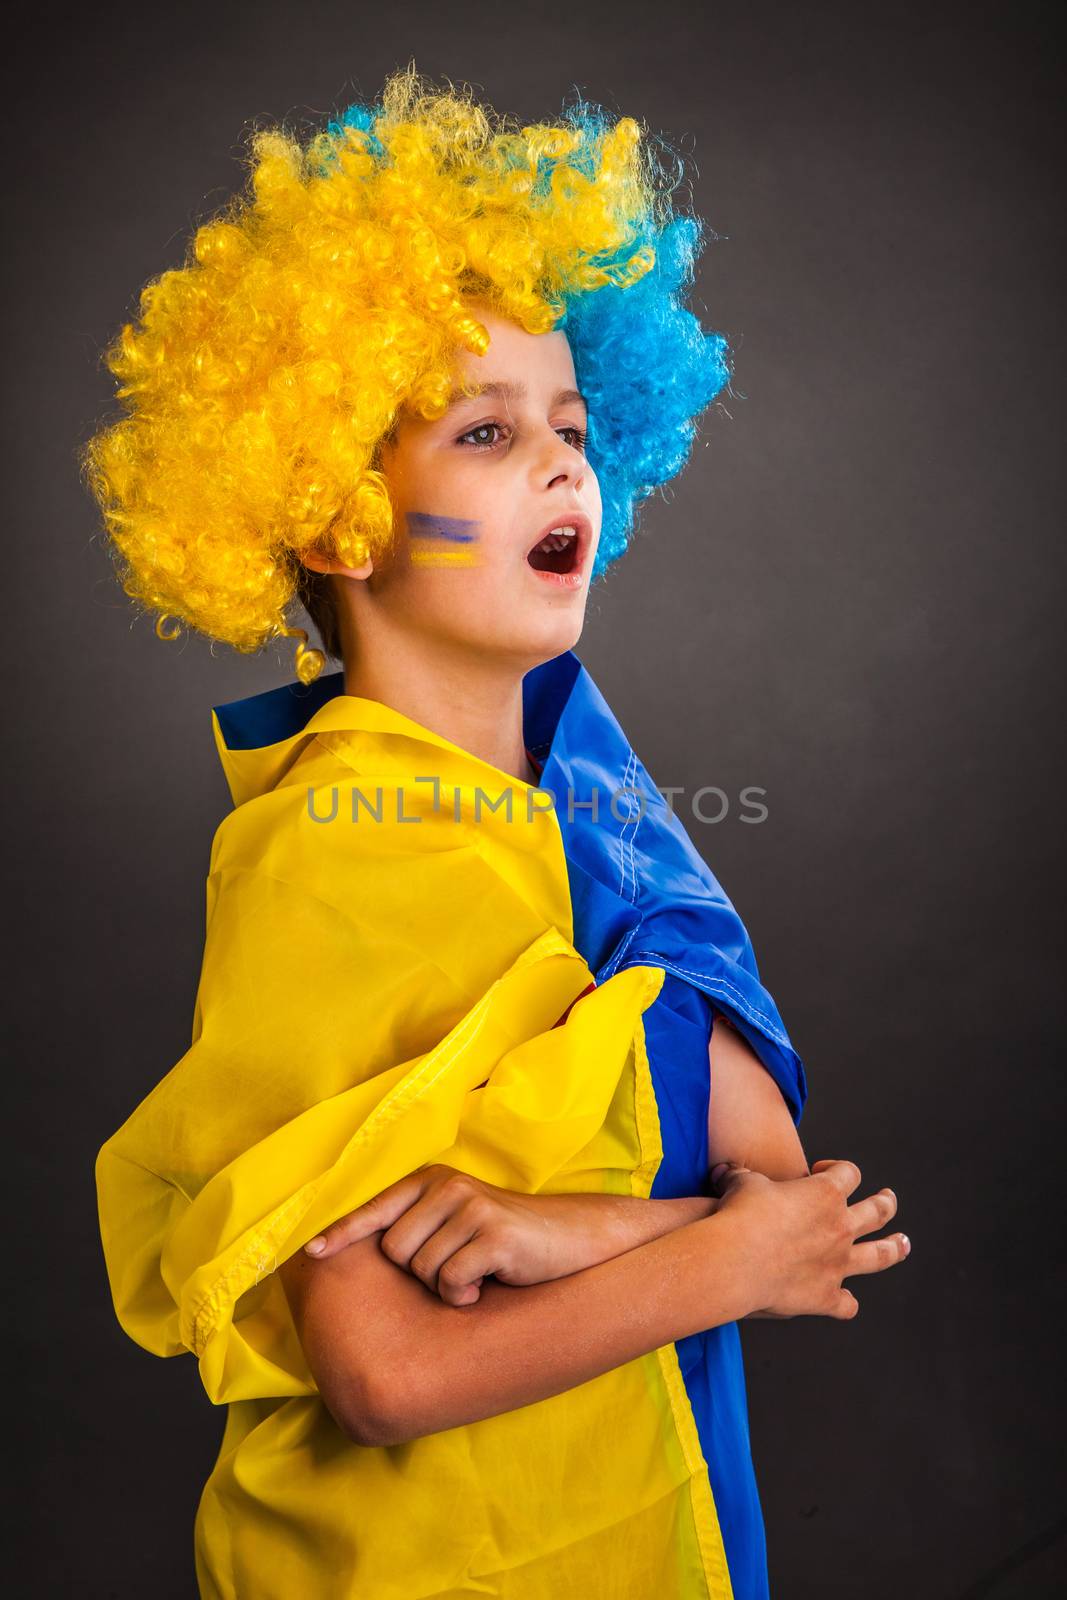 Football fan with ukrainian flag on a black background by bloodua